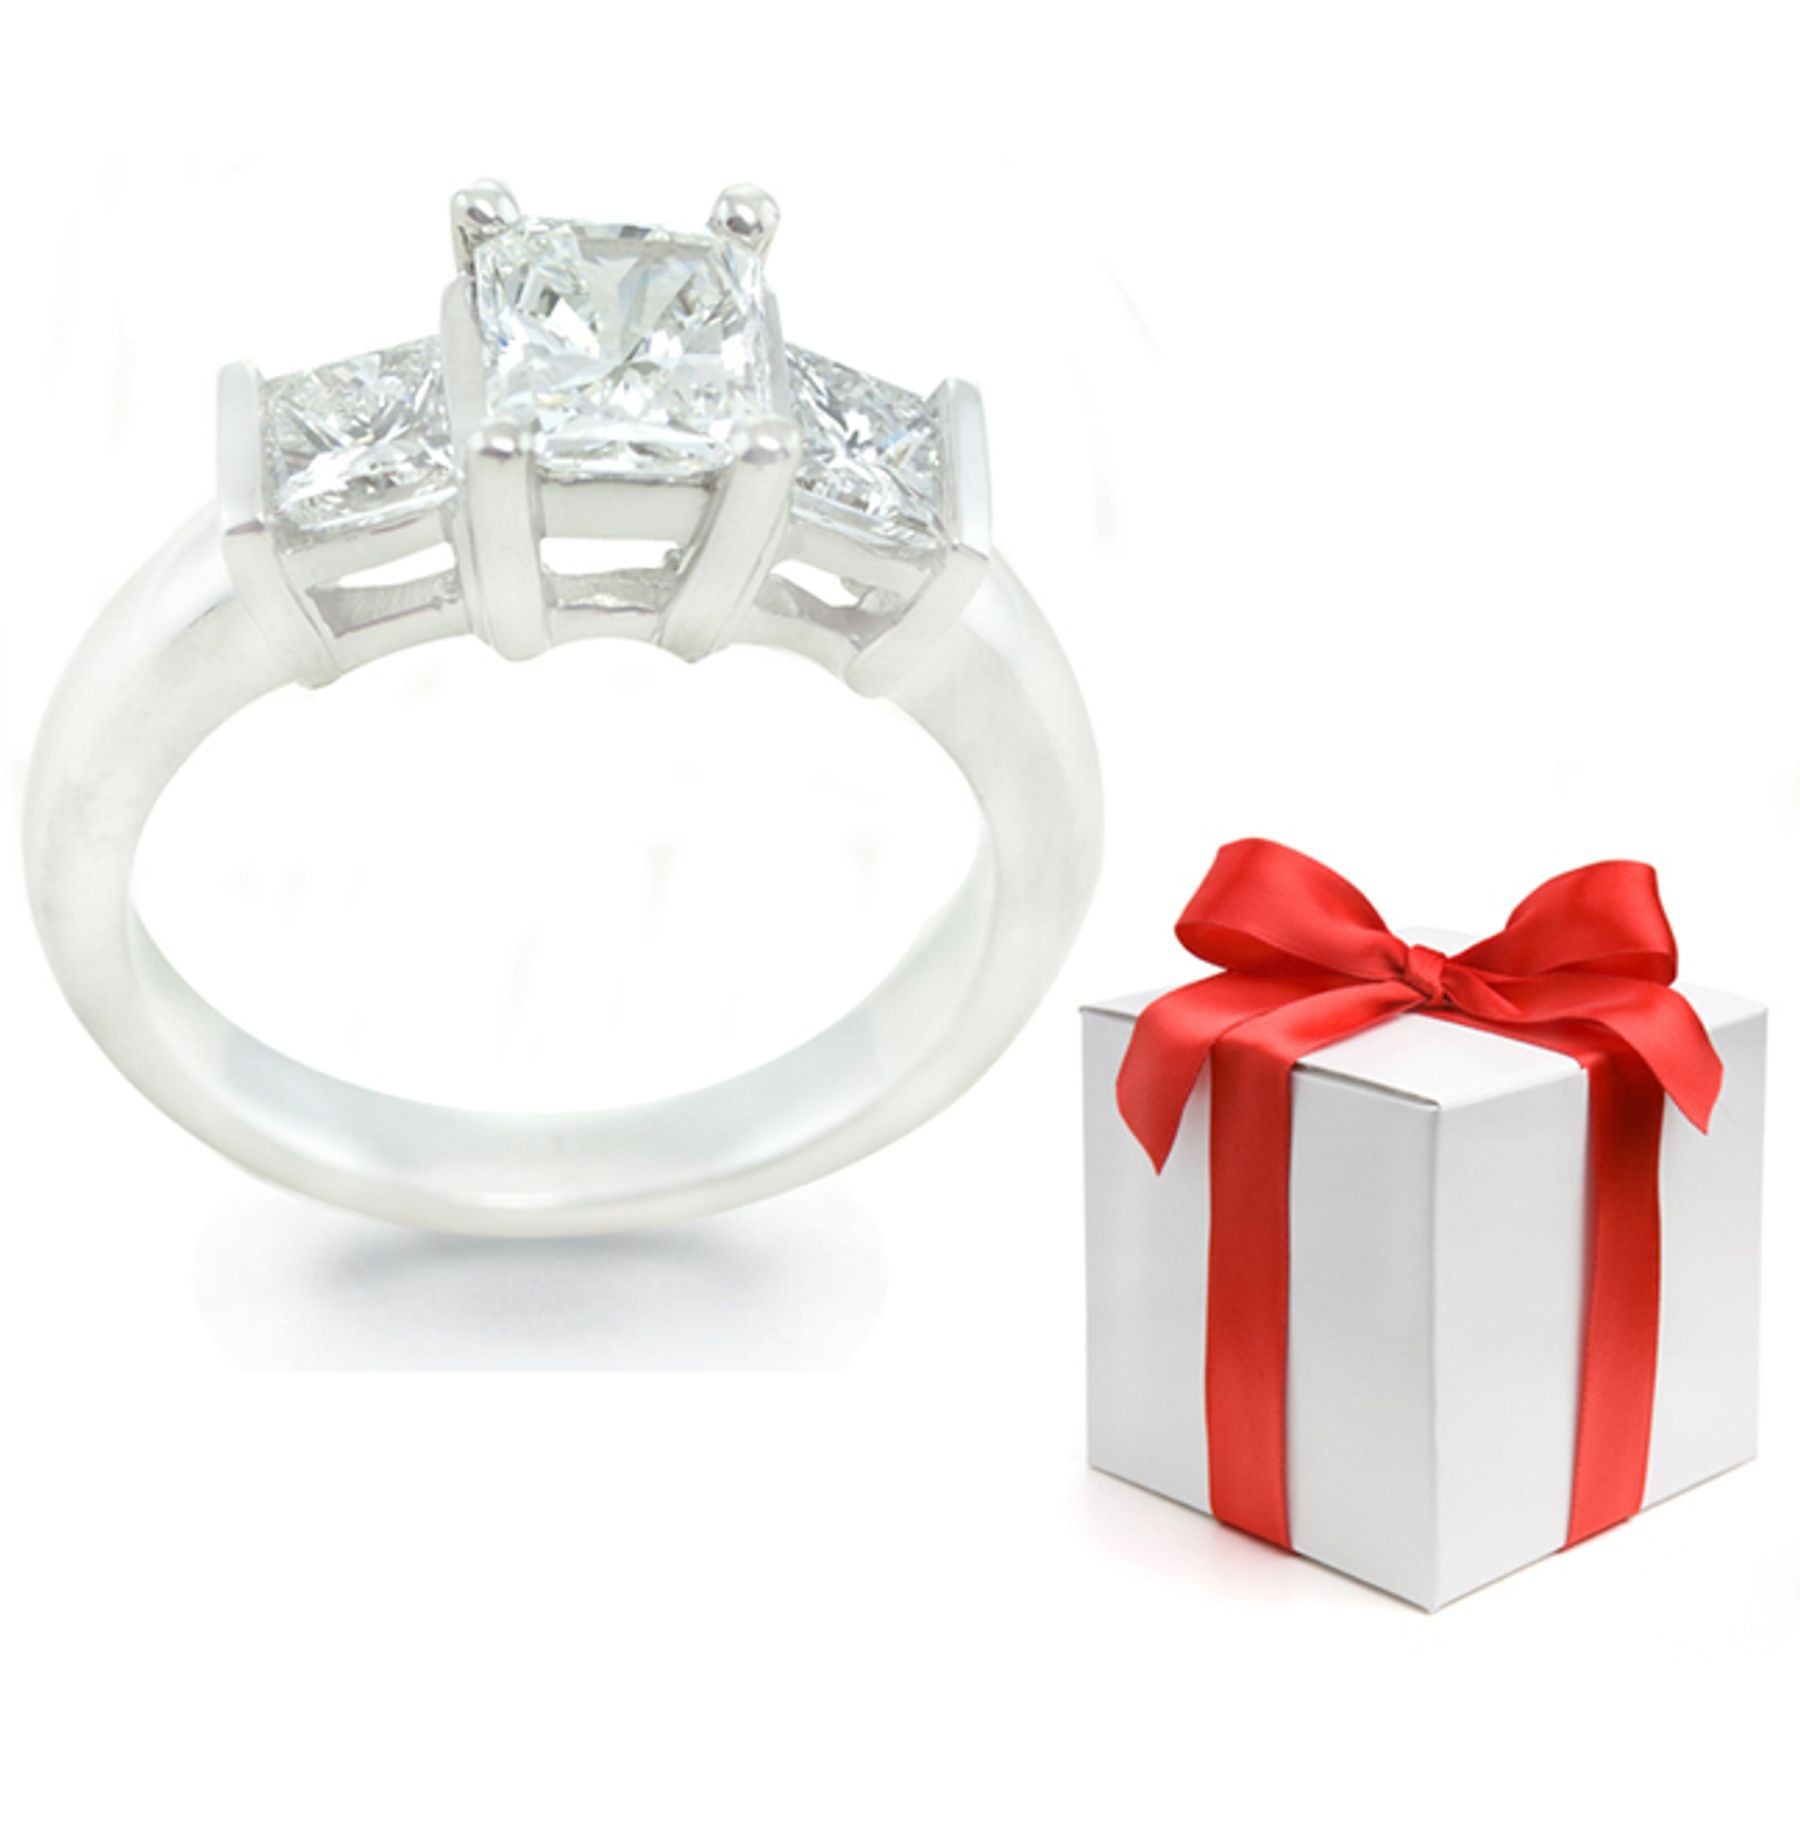 Anniversary Rings: Three Stone (Three Princess Cut Diamonds) Ring in Platinum. 